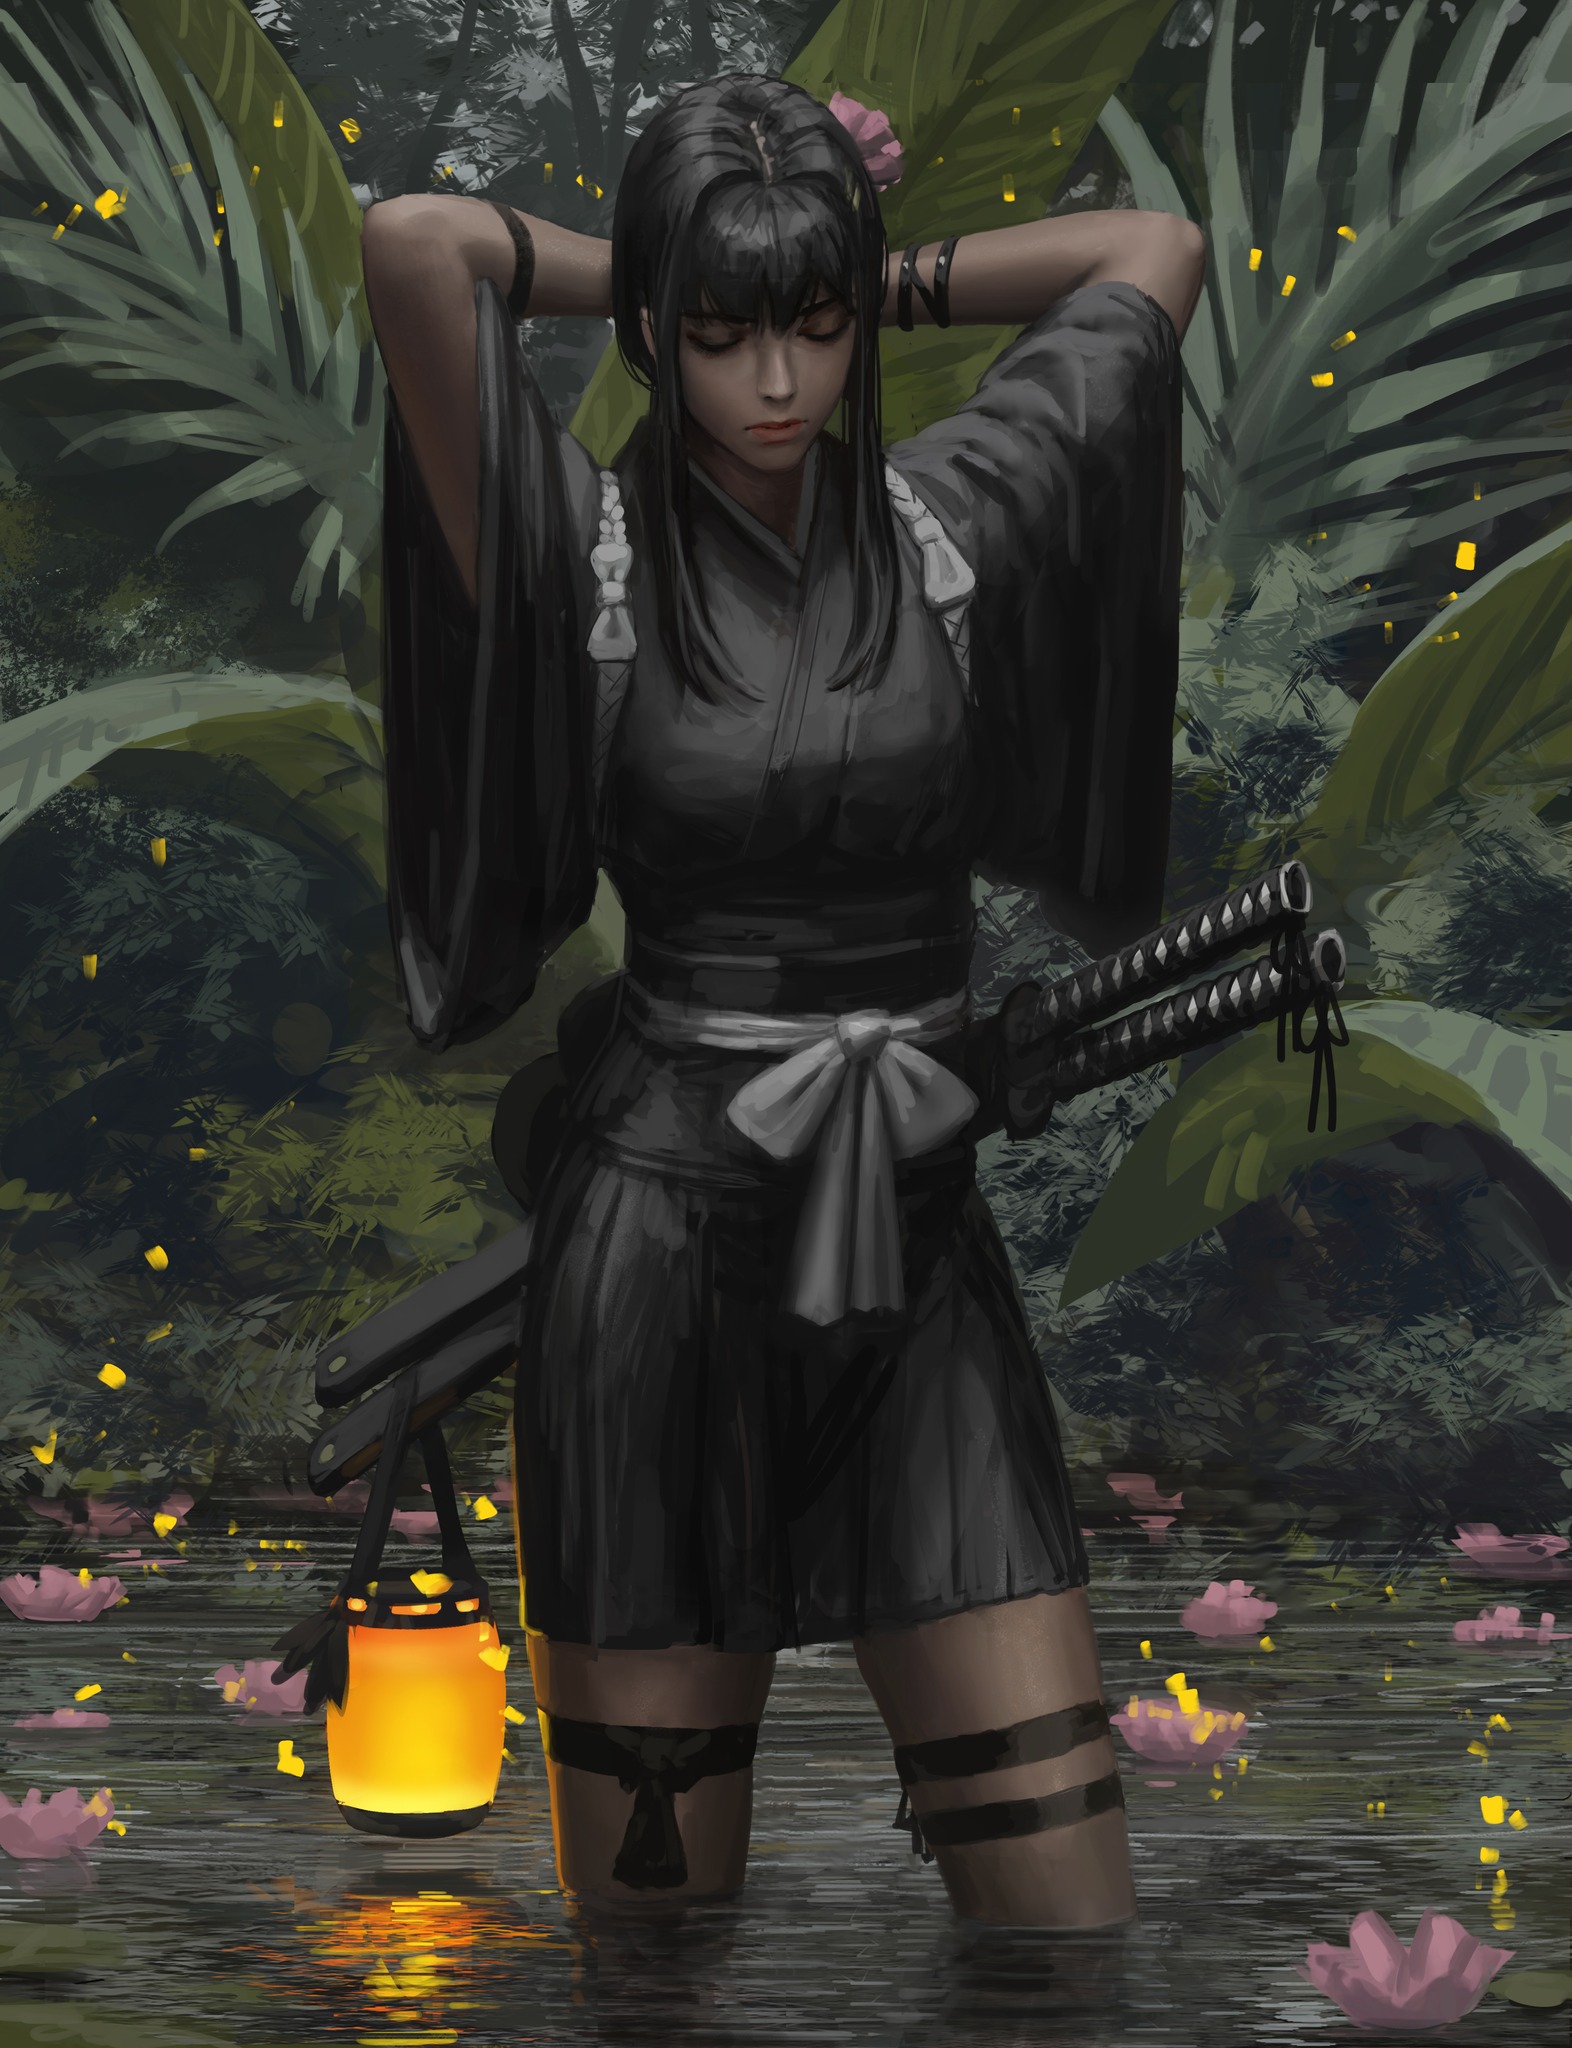 GUWEiZ Fantasy Girl Original Characters Artwork Digital Art Painting Women Dress Lantern Sword